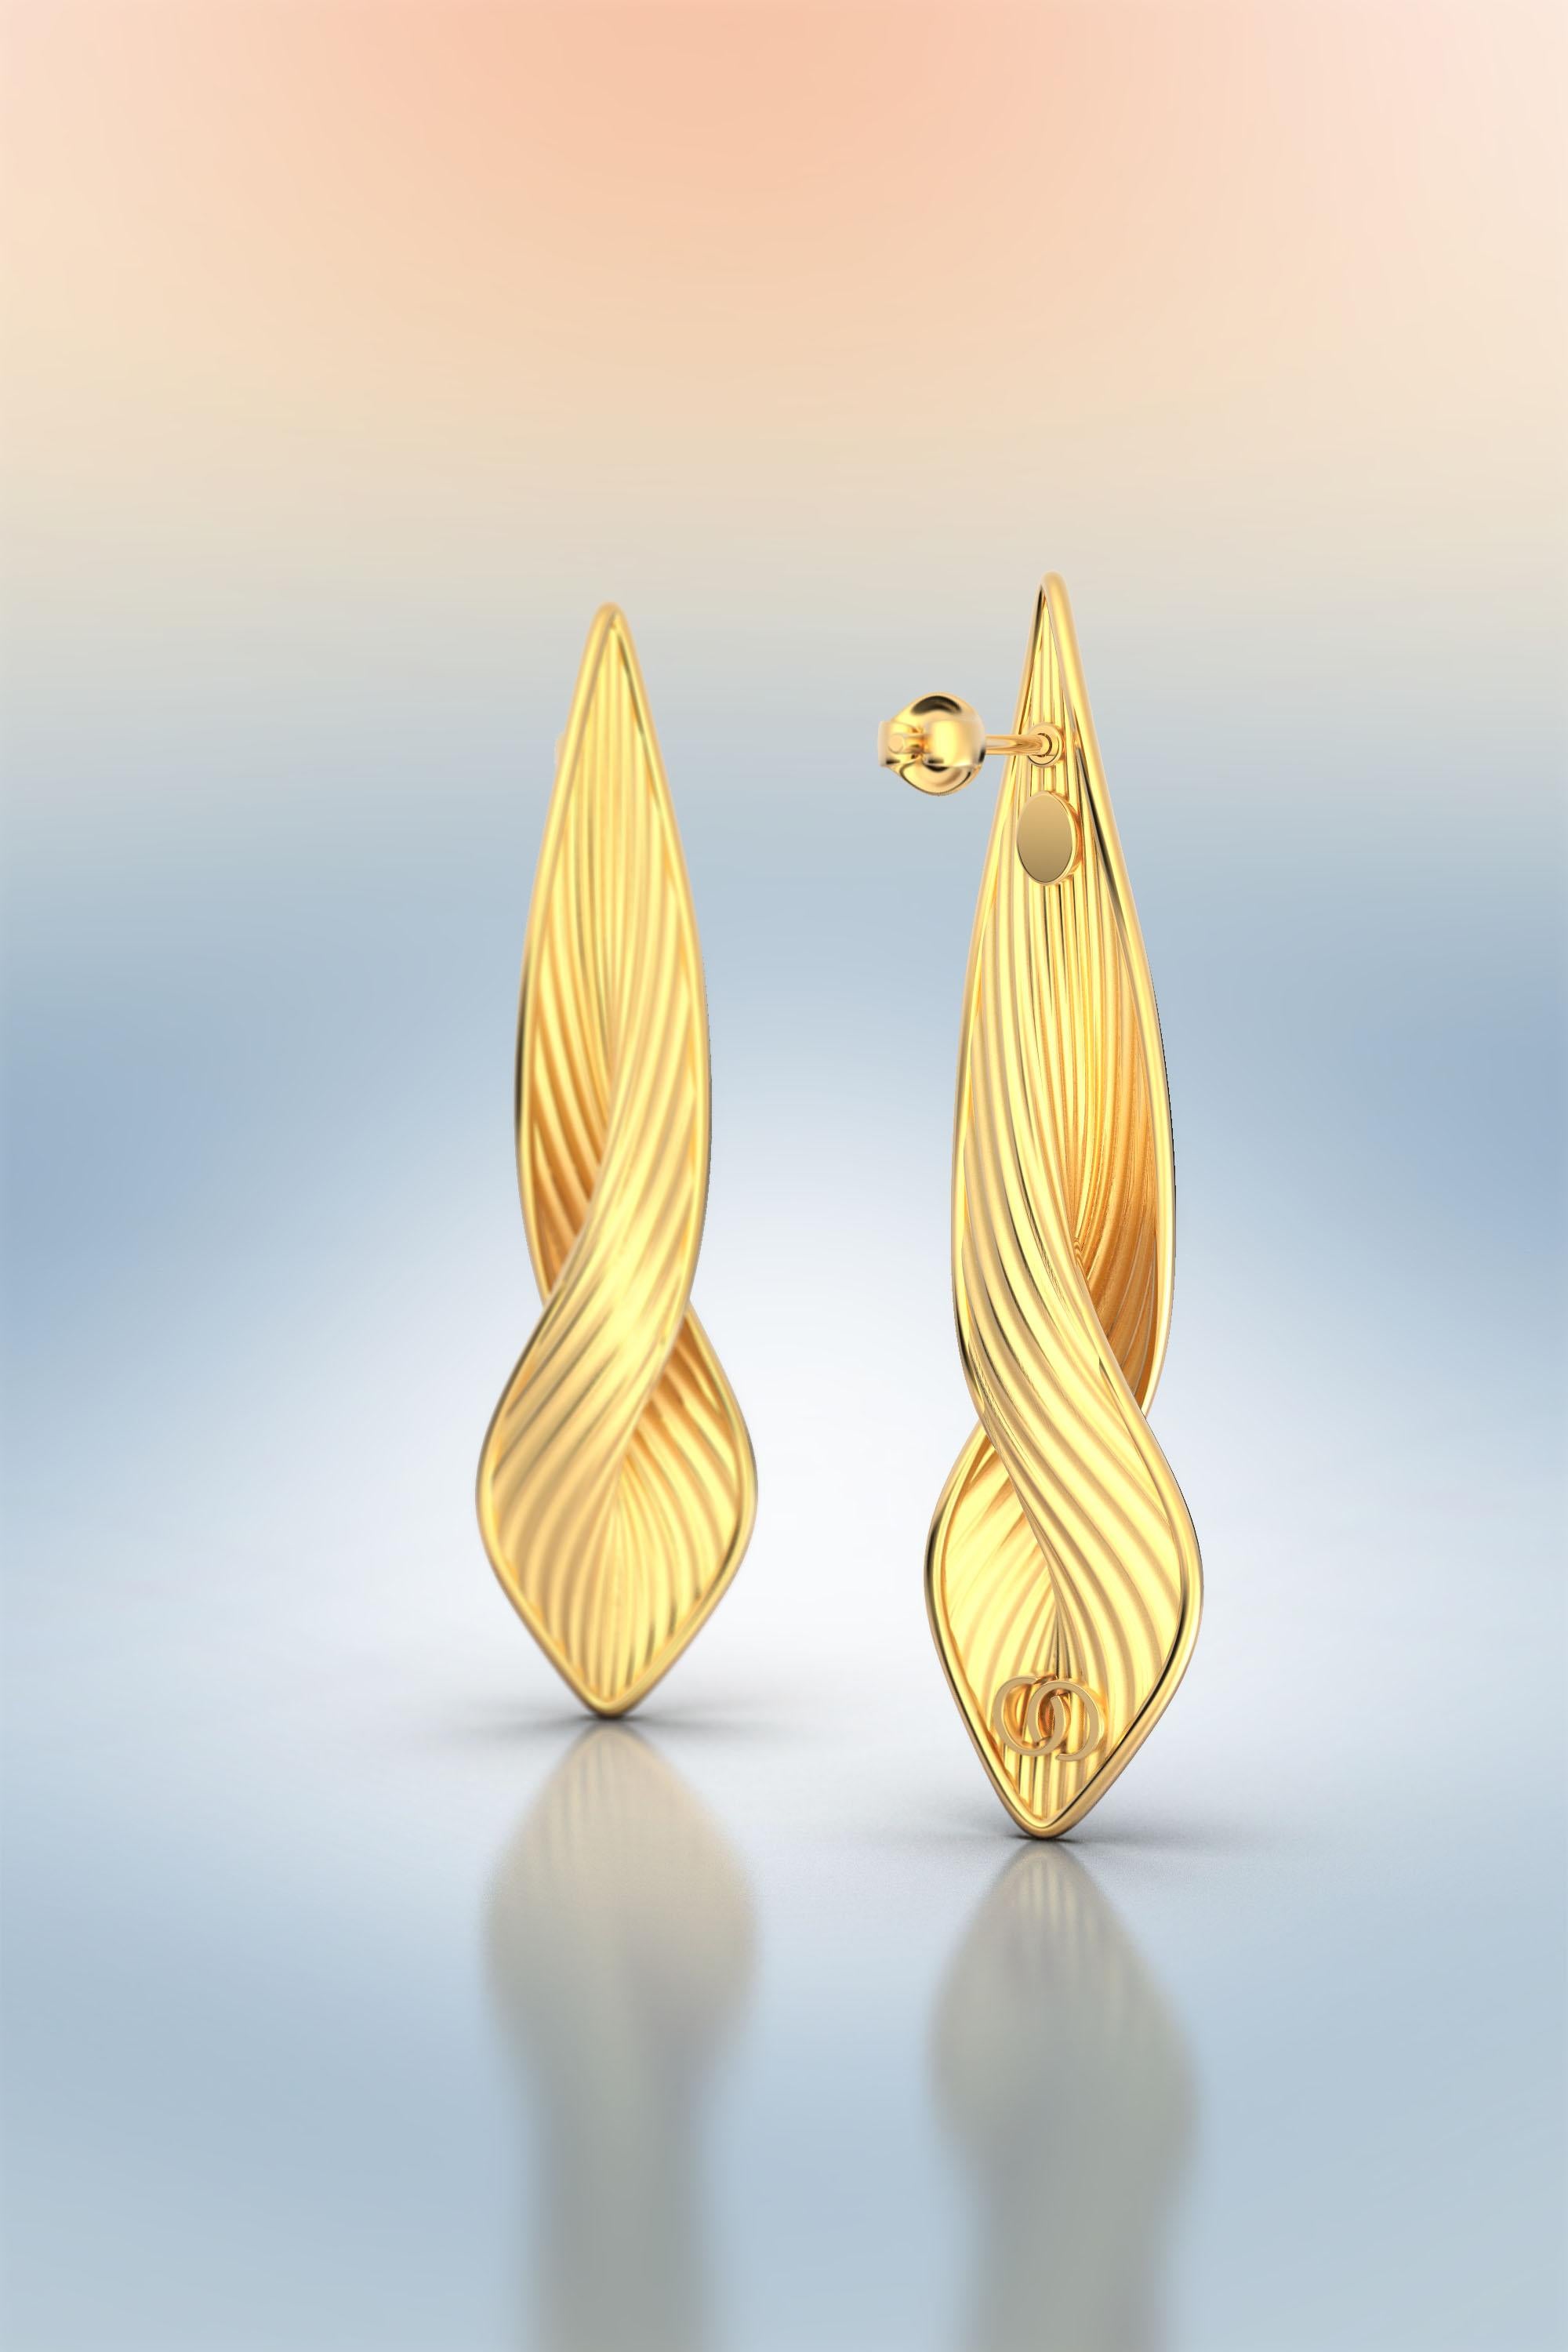 Women's Long Twisted Earrings in 14k Solid Gold Italian Fine Jewelry Made in, Italy For Sale